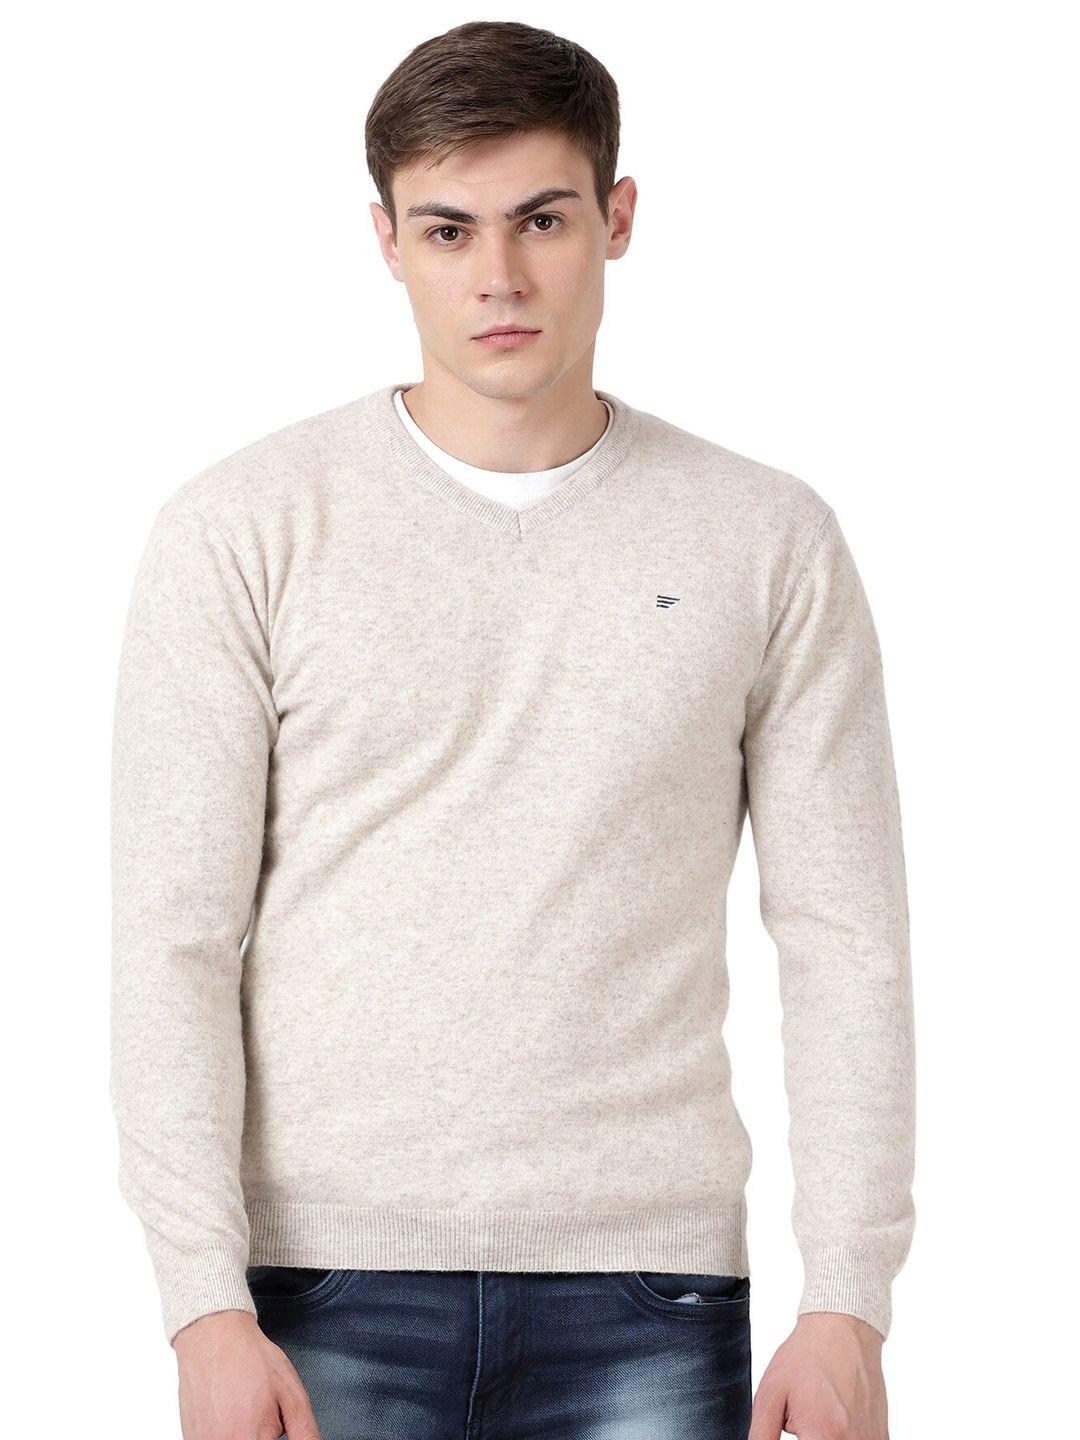 t-base-v-neck-woollen-pullover-sweater